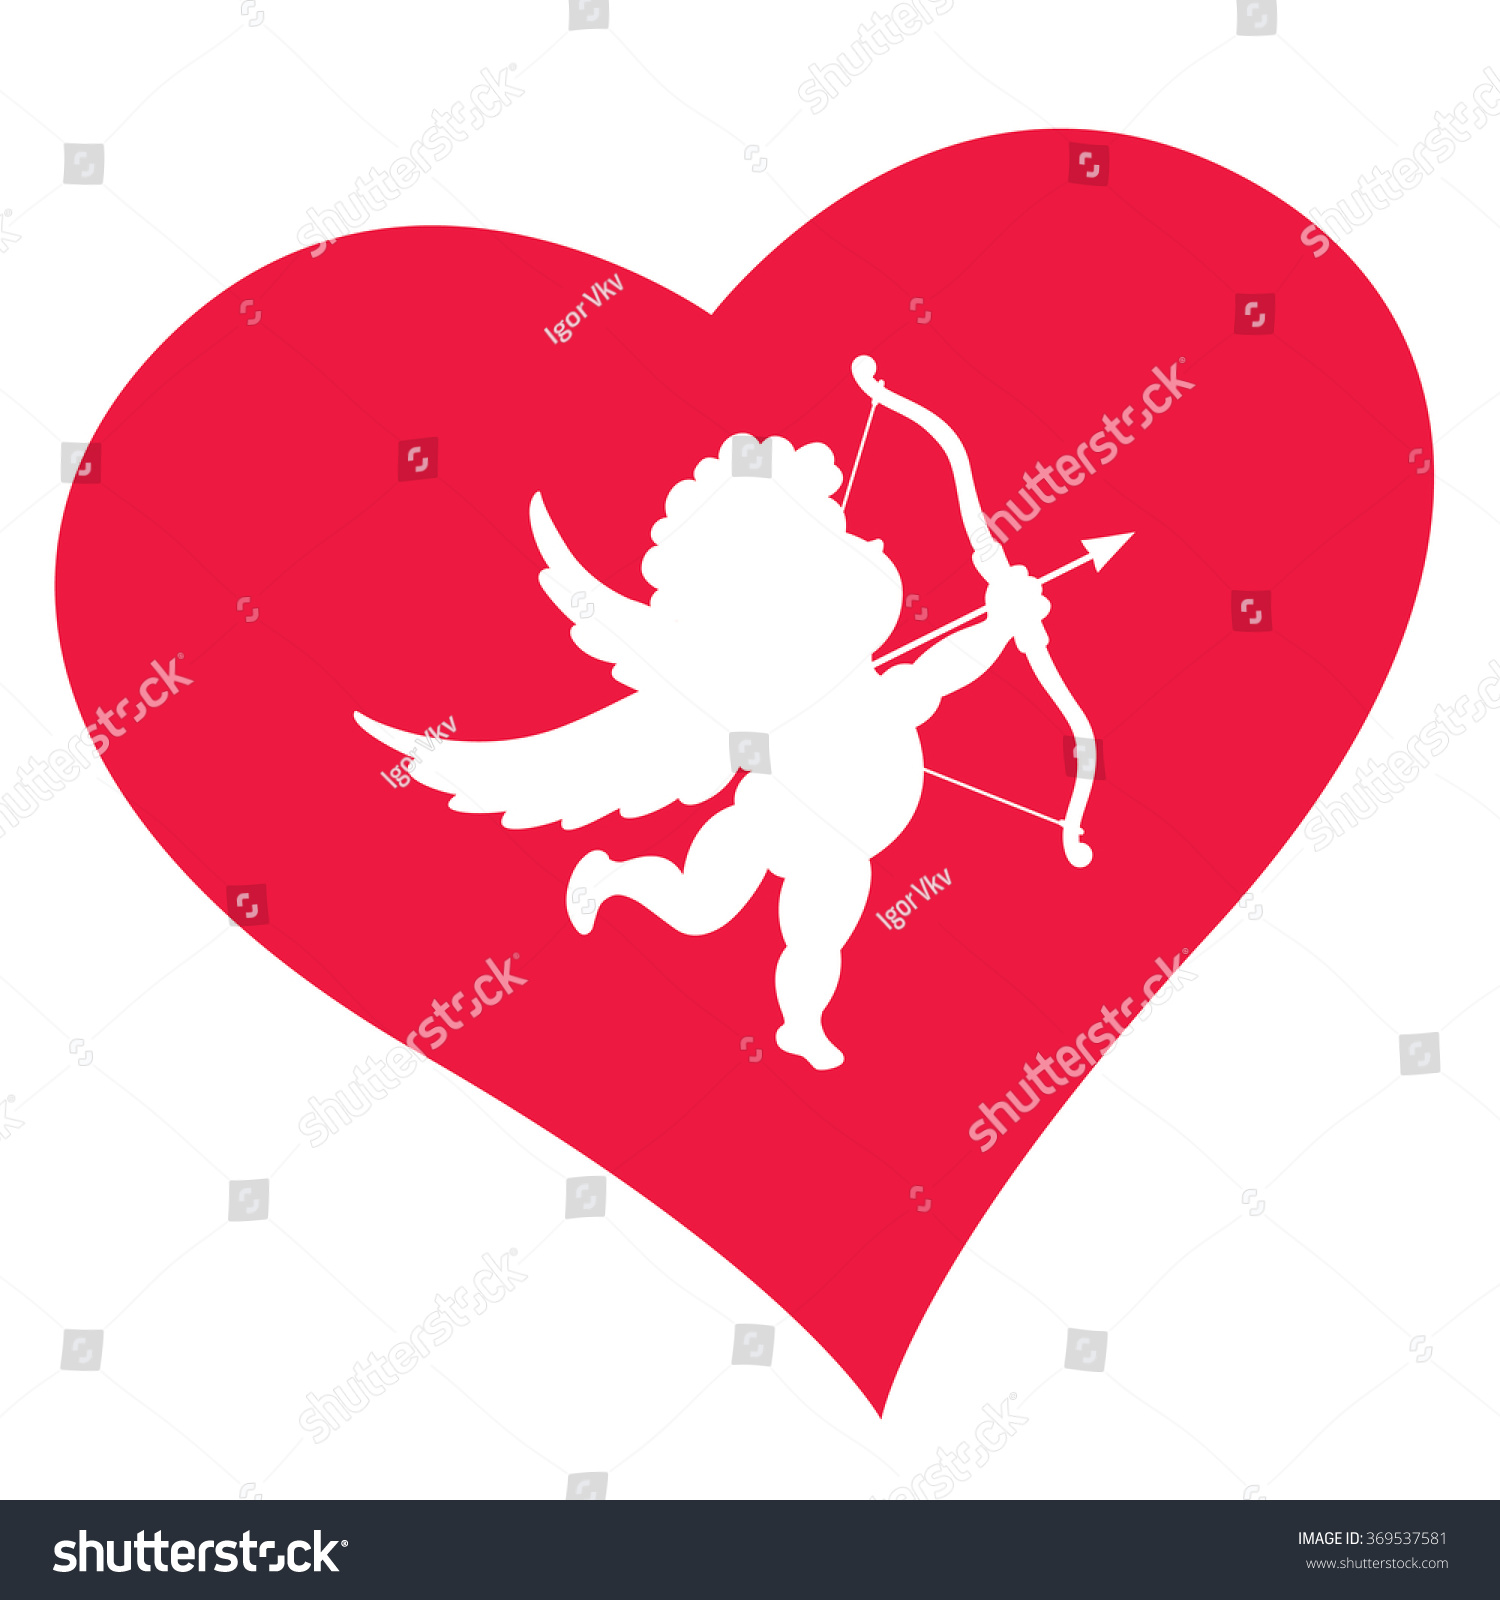 Silhouette Cupid Heart Vector Illustration Stock Vector Royalty Free 369537581 Shutterstock 0757